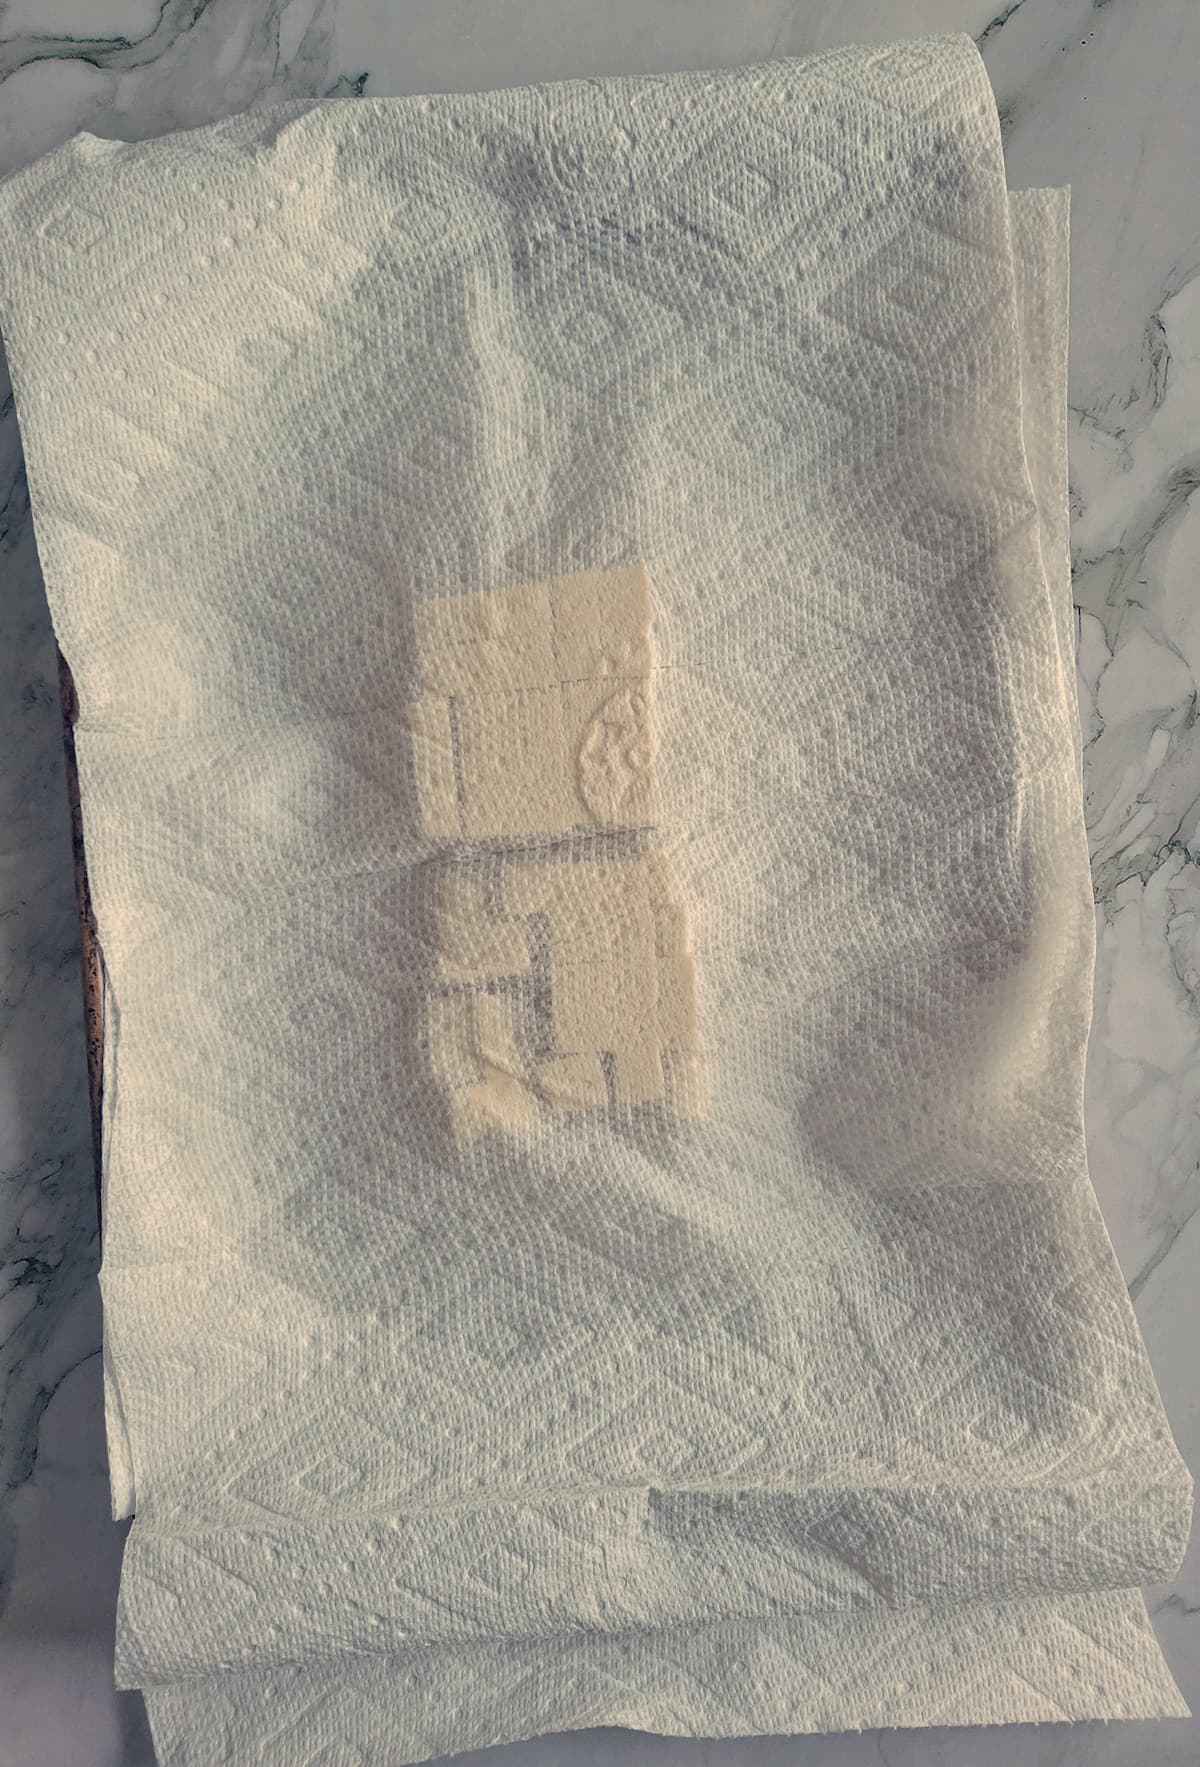 two blocks of tofu cubes under paper towel